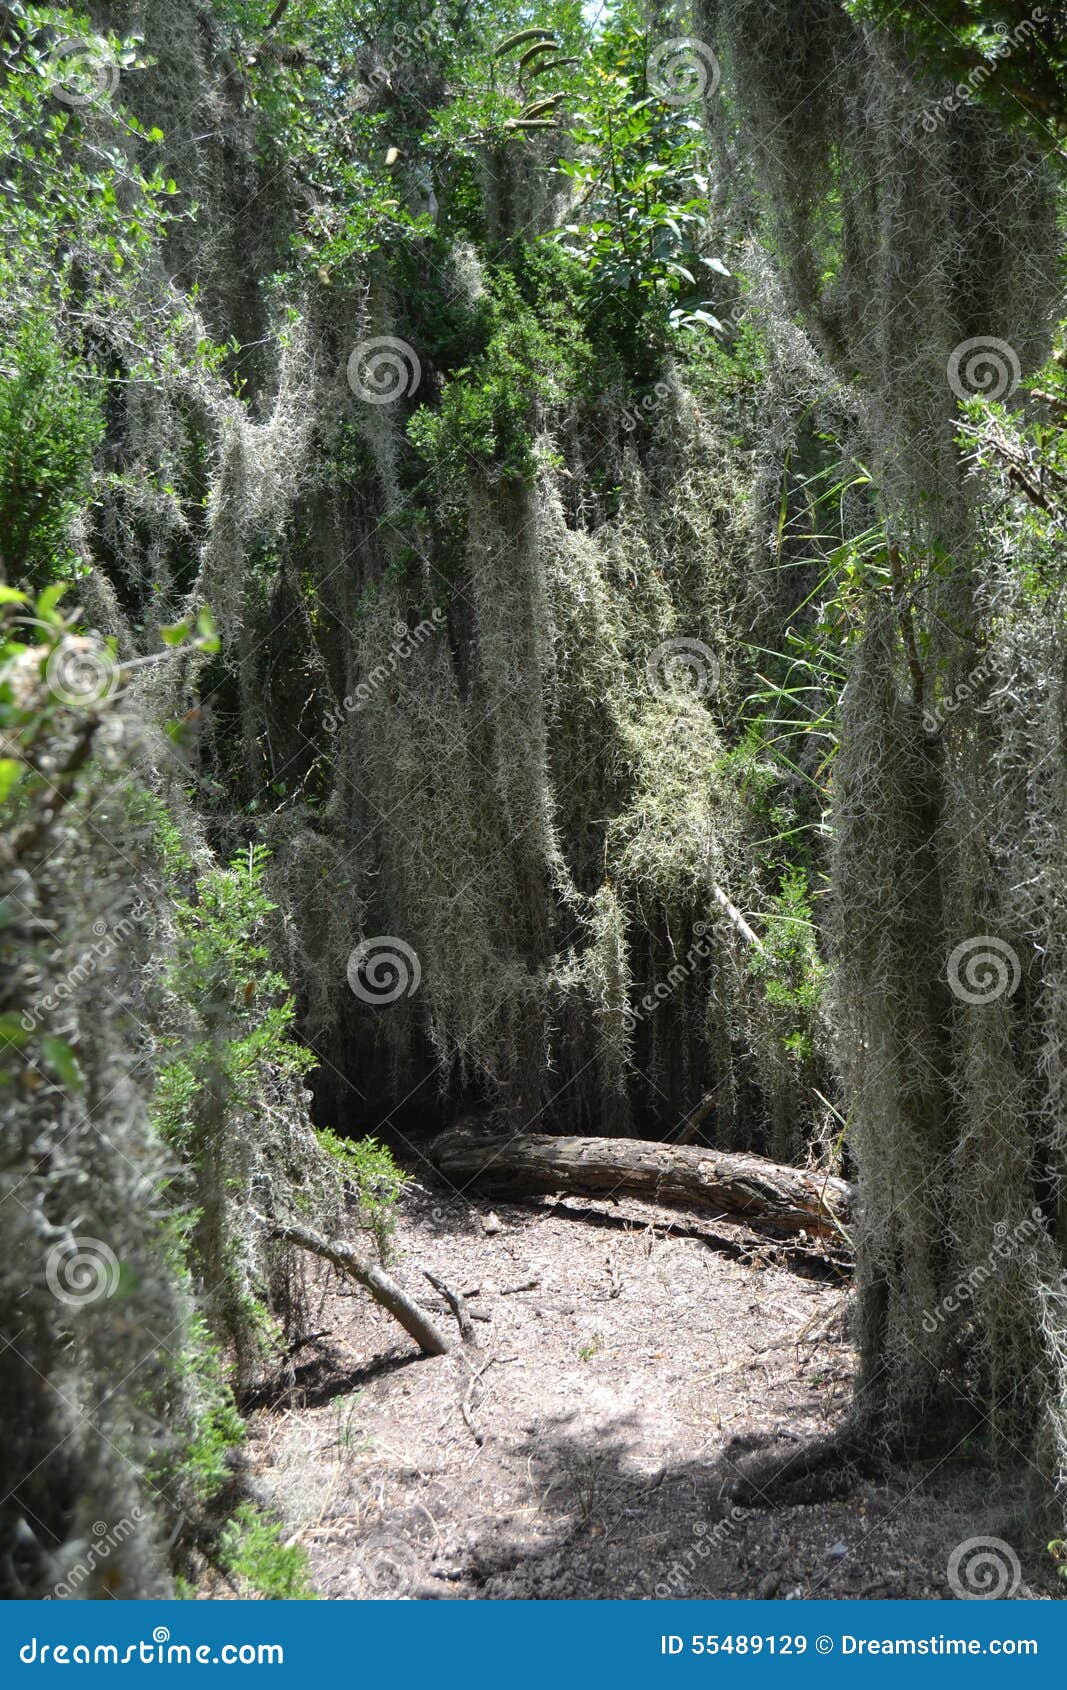 spanish moss growing freely among trees